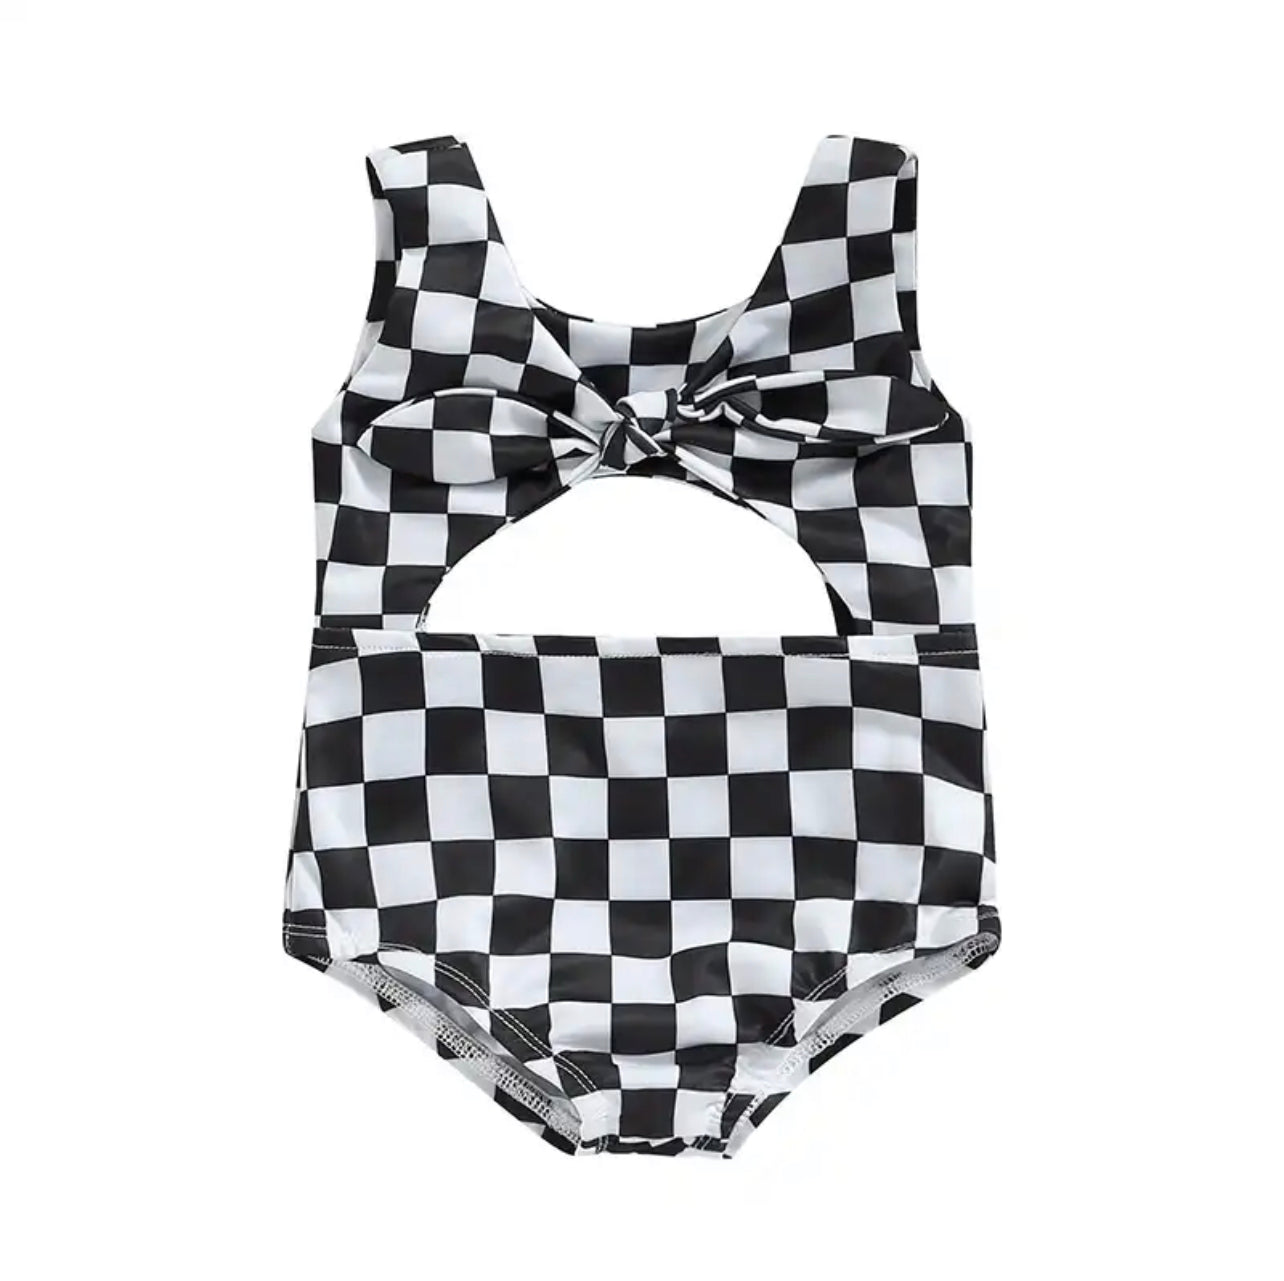 Black + white checkered swim suit